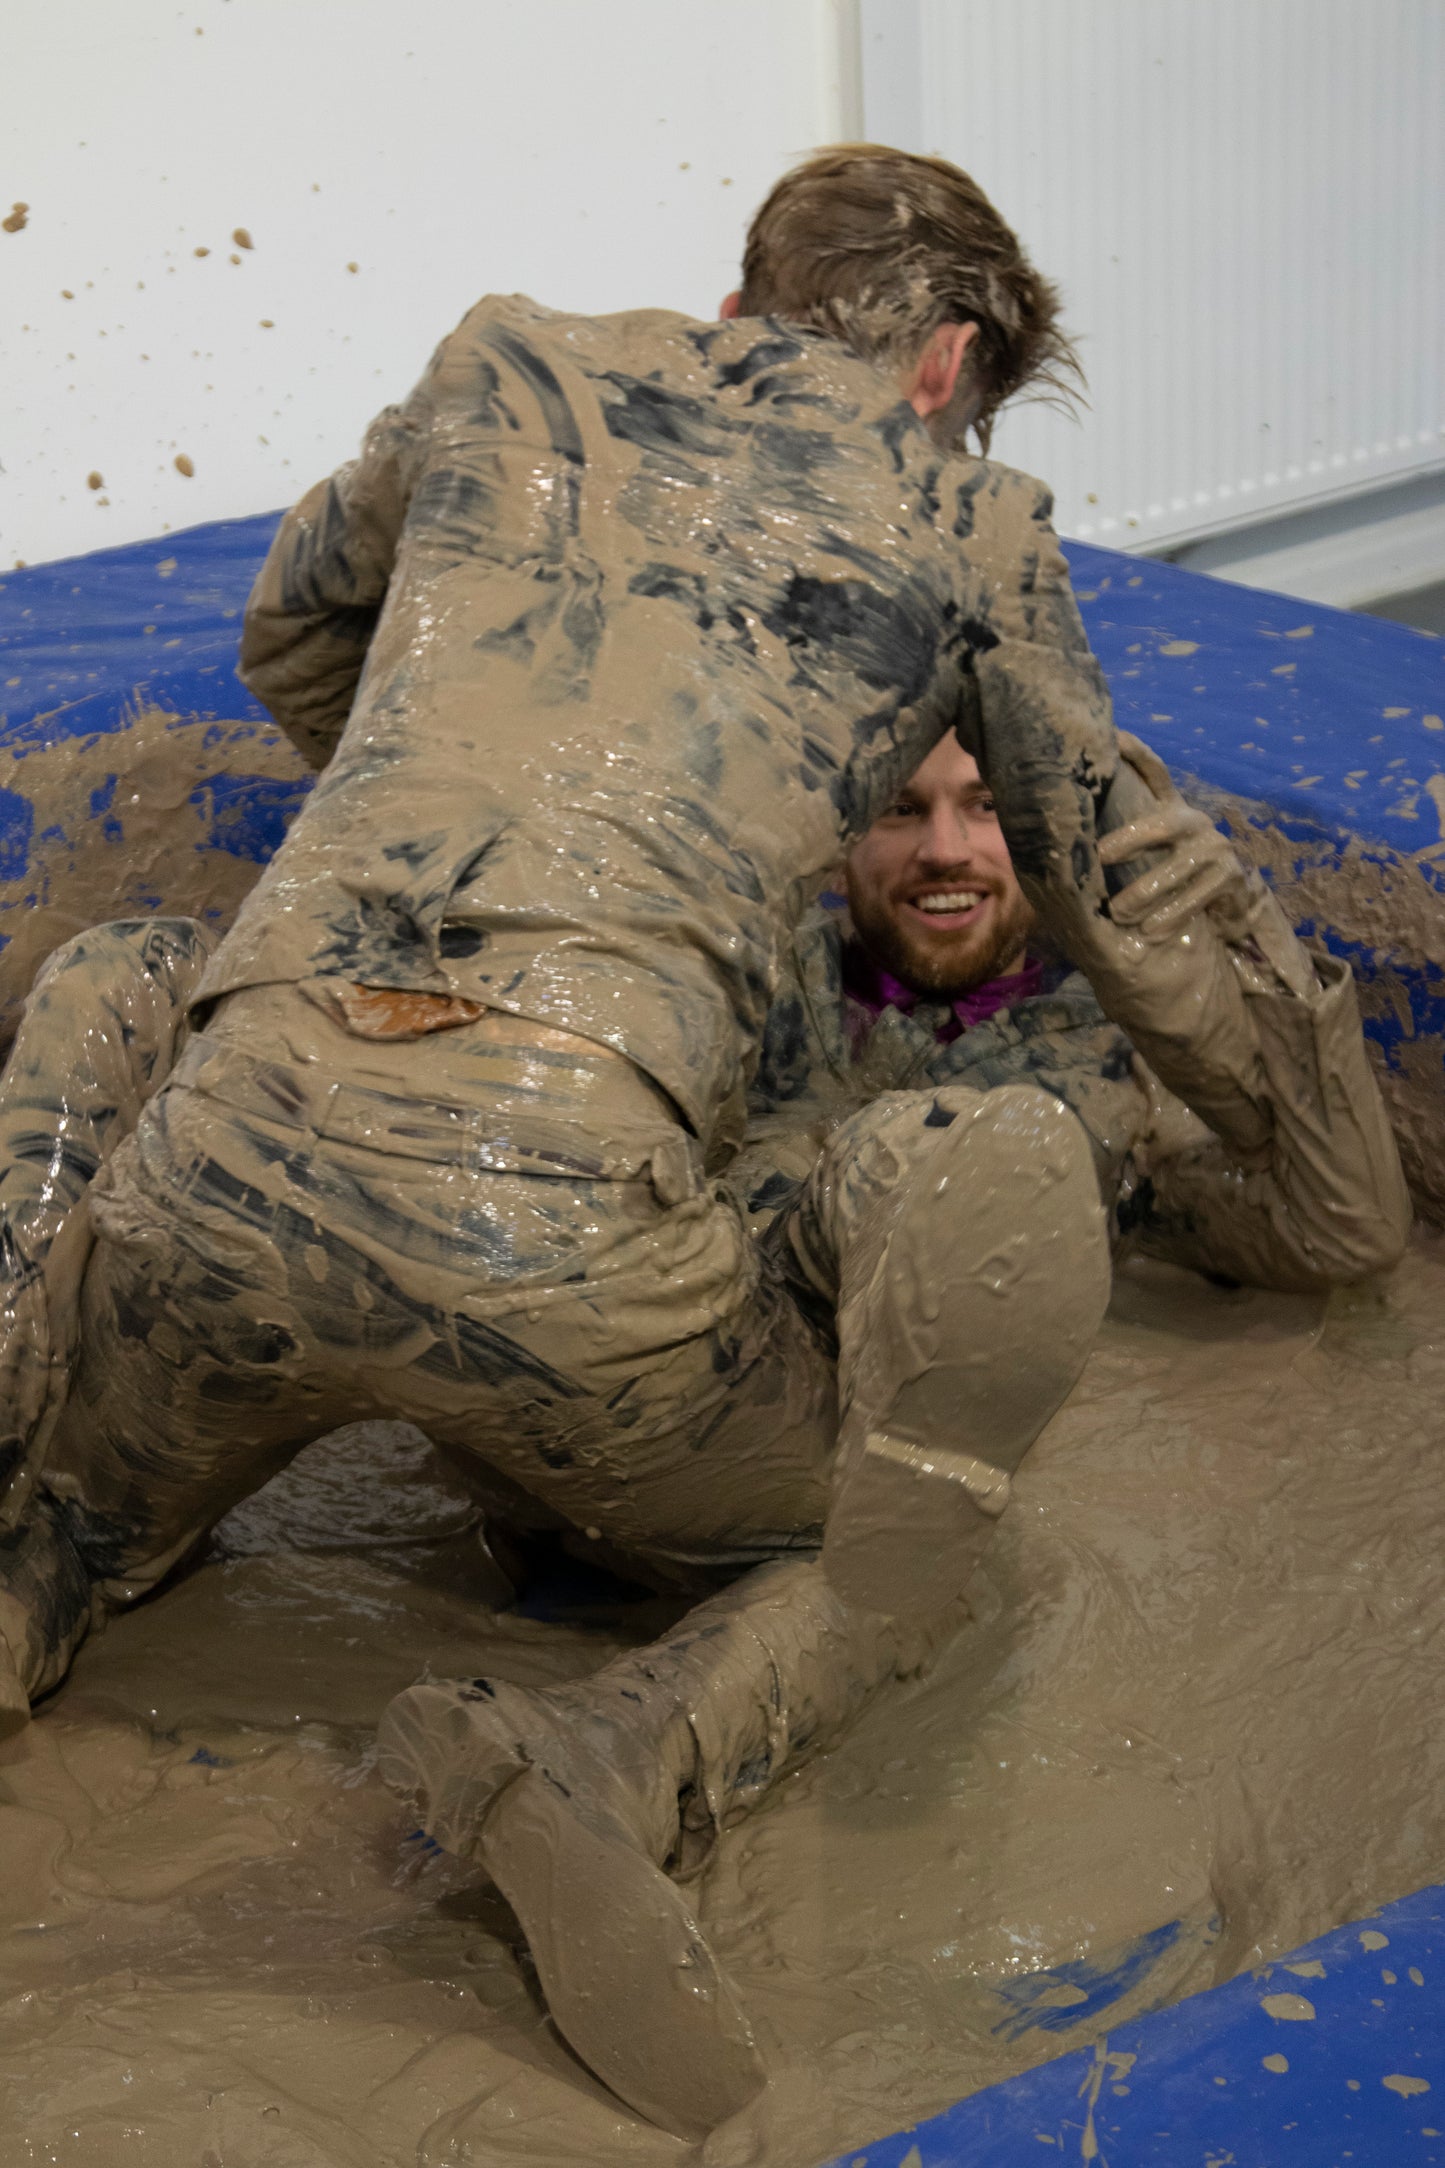 James & Adam Wedding Mud Wrestle Video